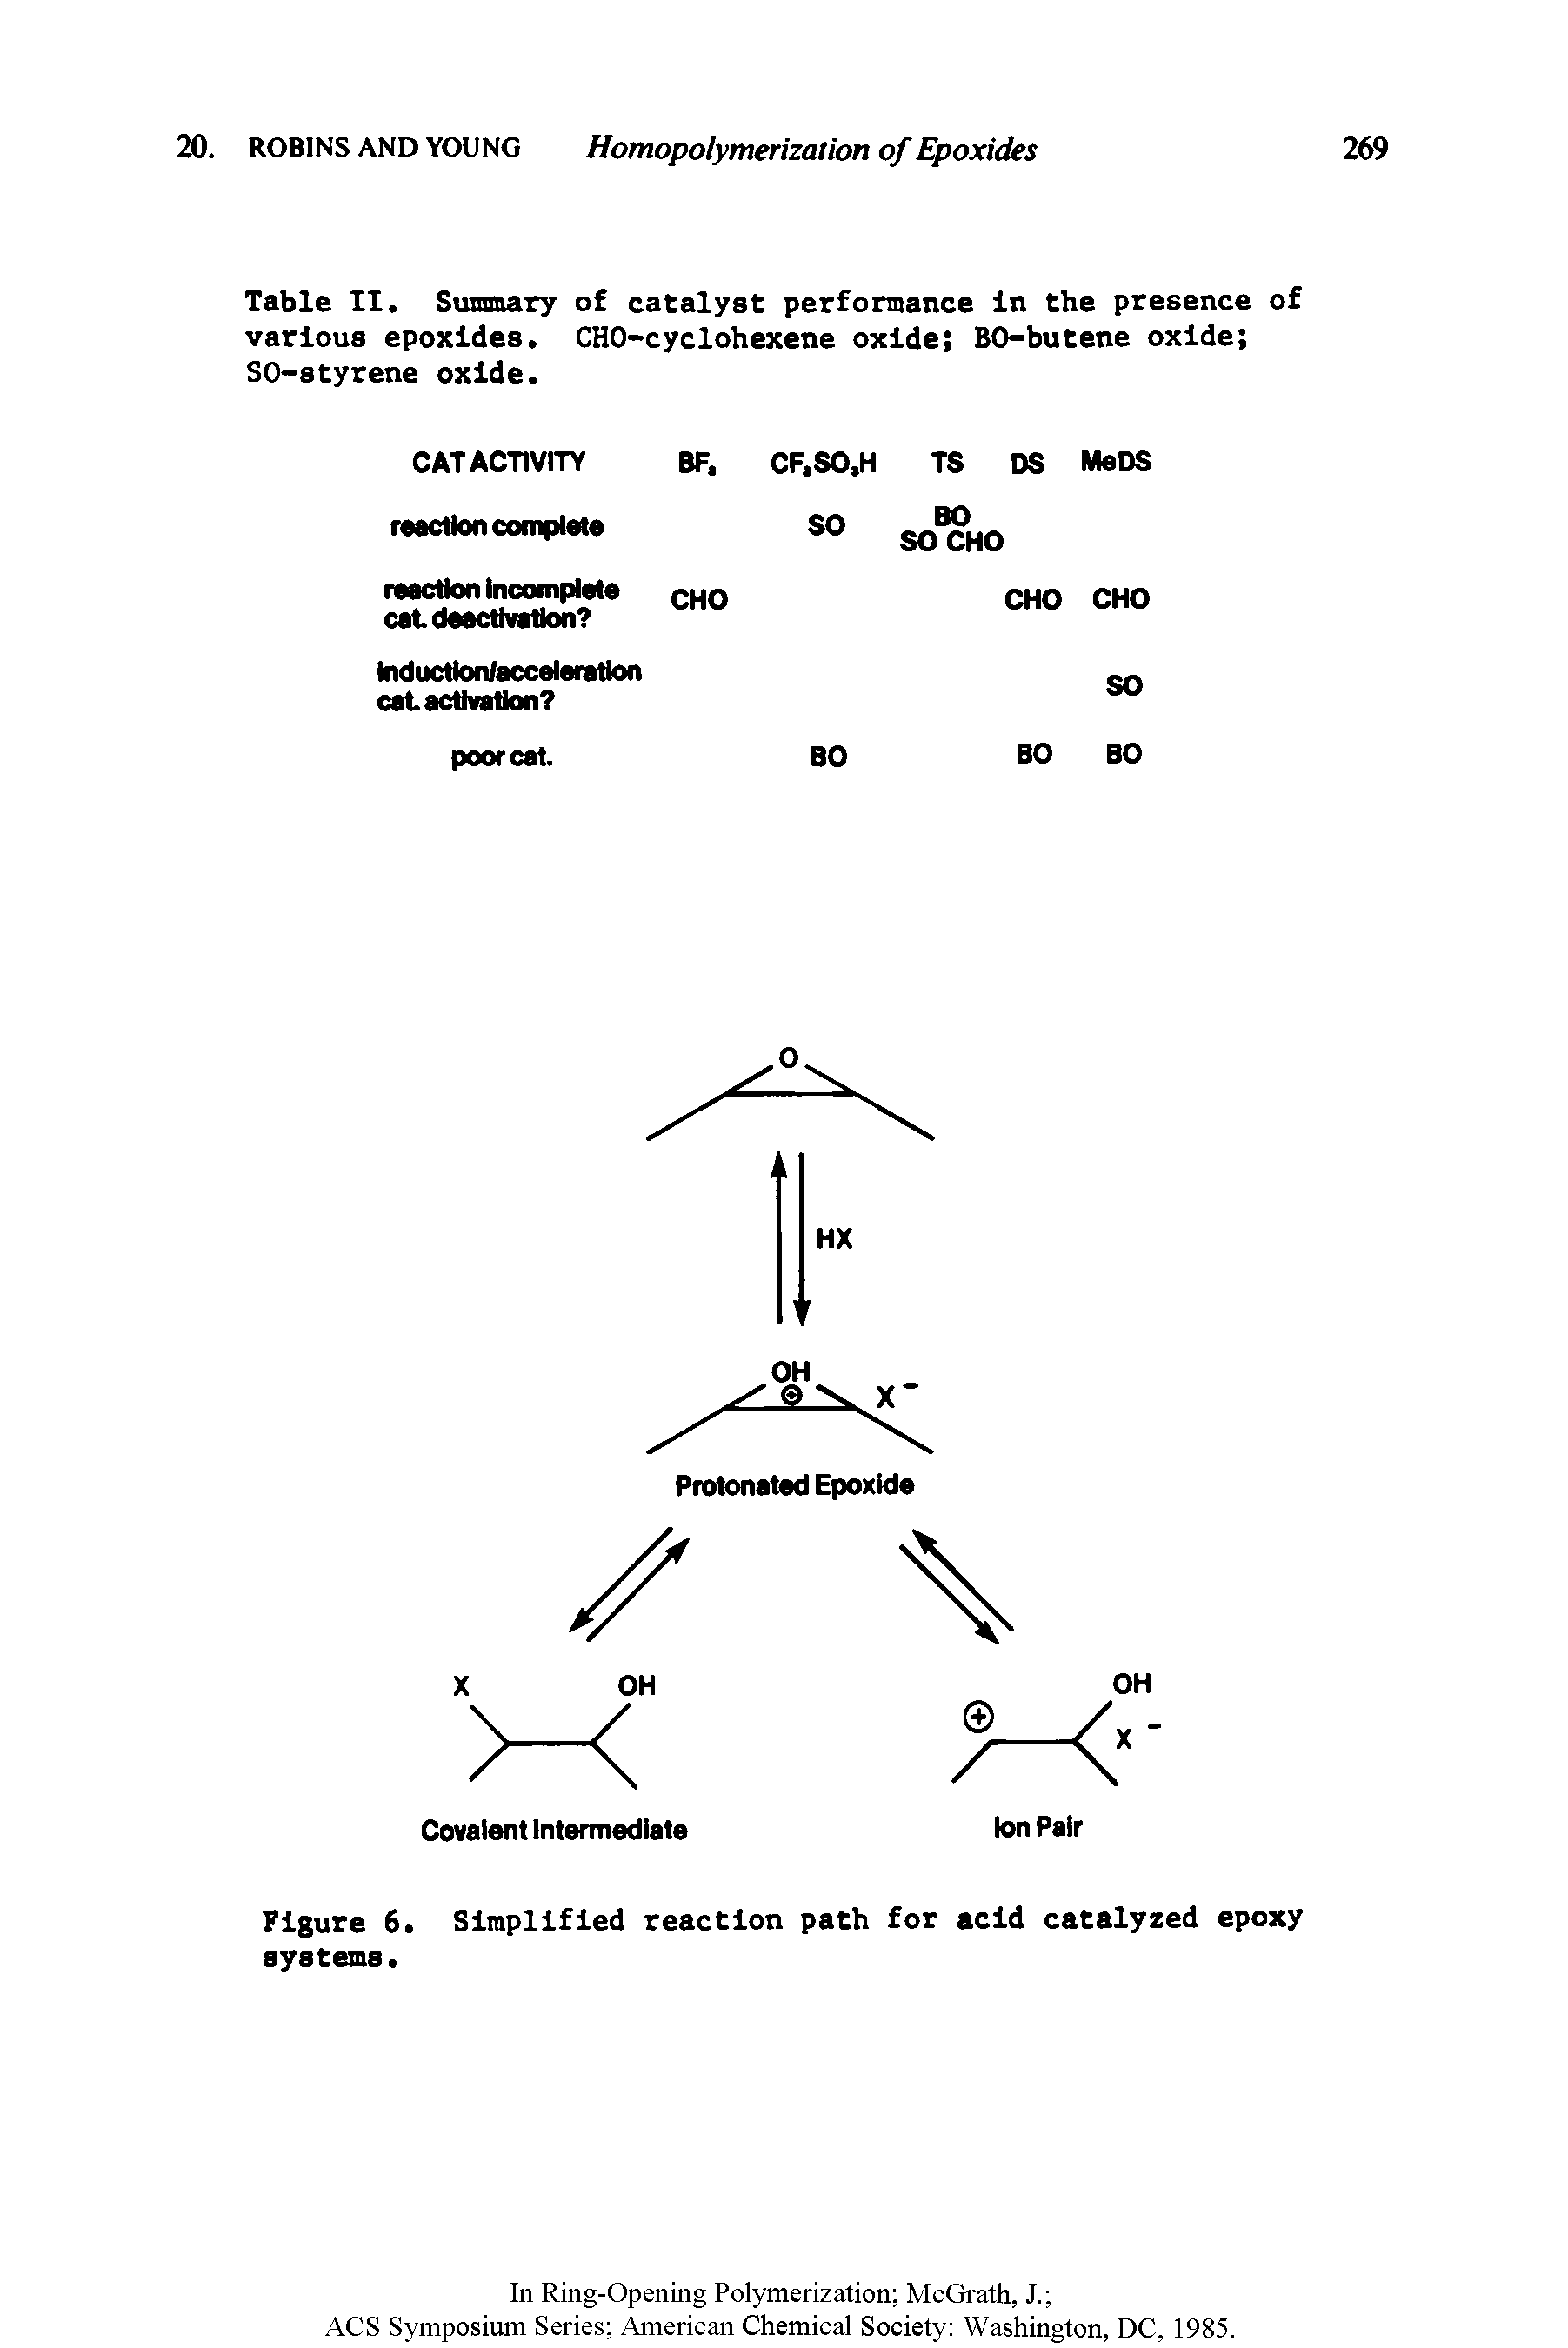 Table II. Sunmary of catalyst performance in the presence of various epoxides. CHO-cyclohexene oxide BO-butene oxide SO-styrene oxide.